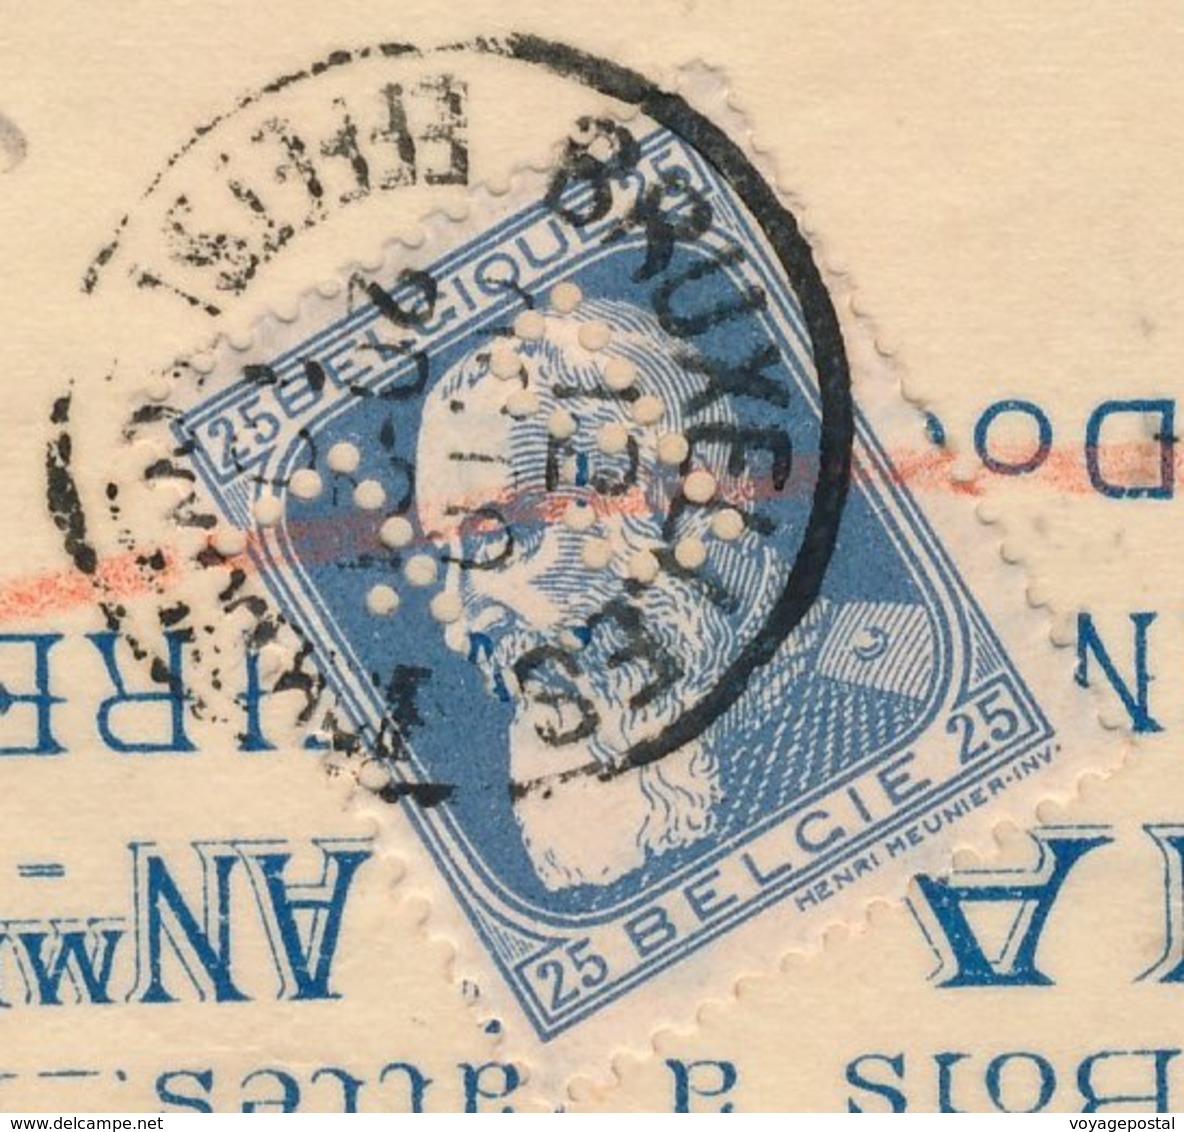 Telegramme Russia Gand Perfore Société Bois Du Nord - 1909-34